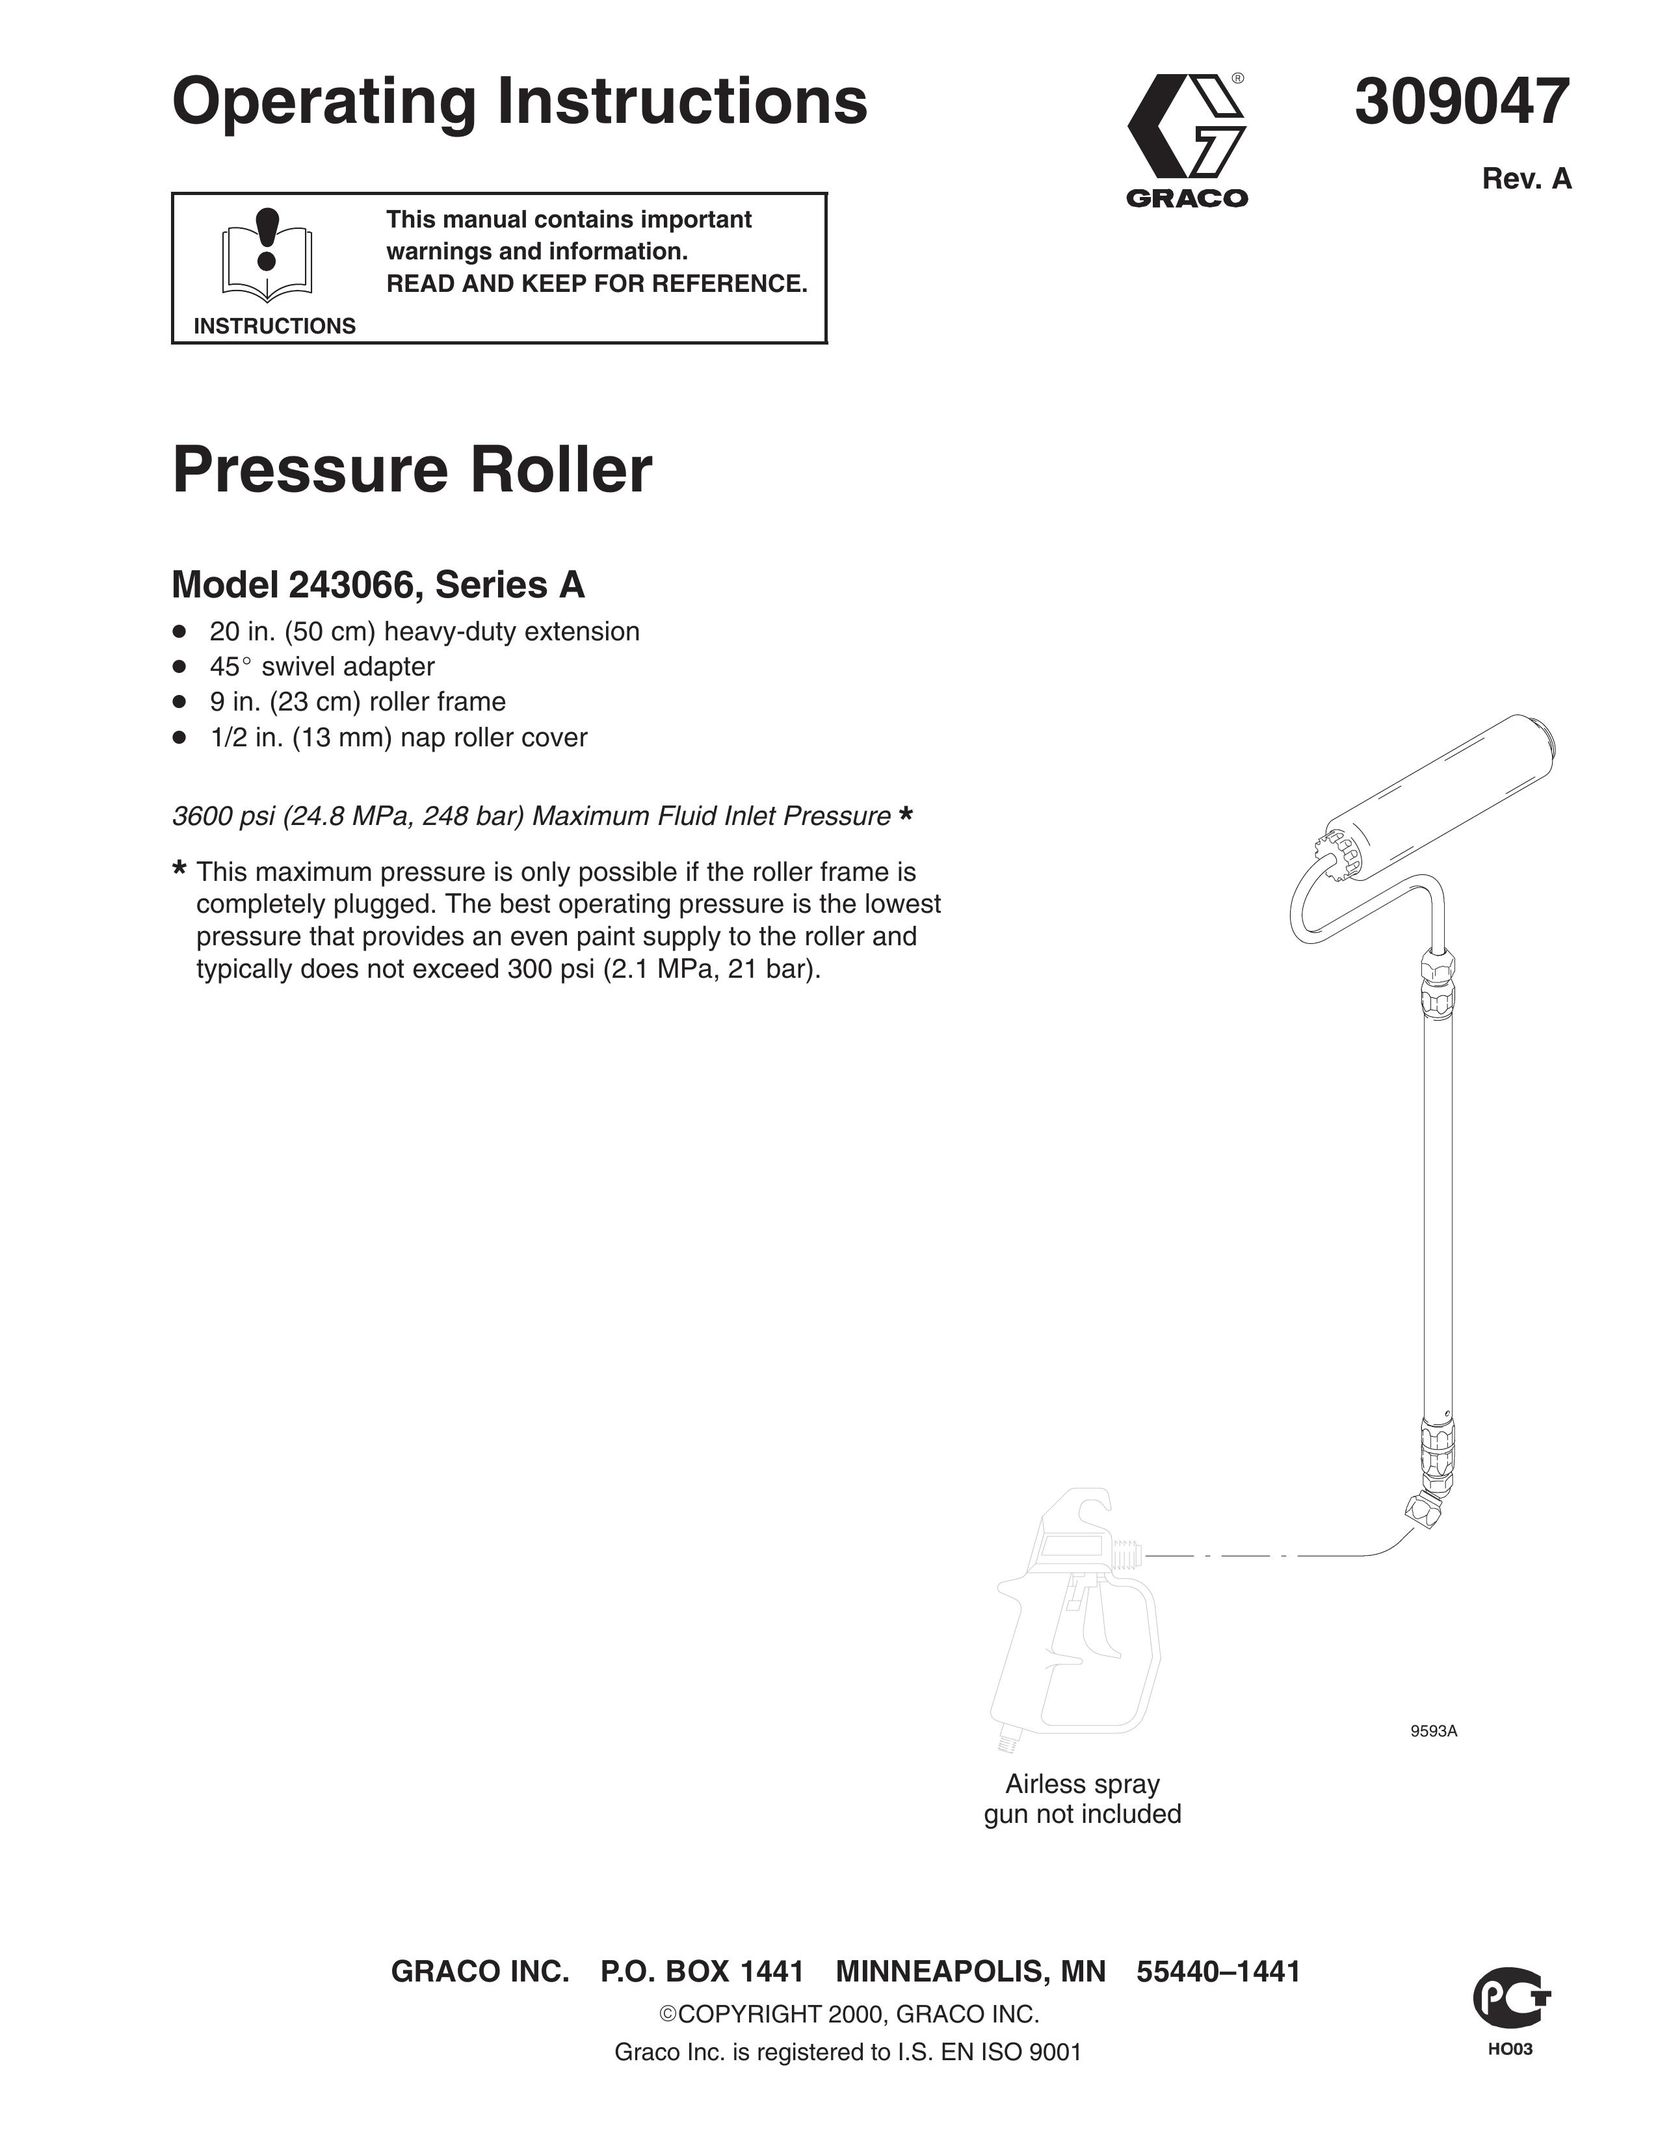 Graco Inc. 309047 Power Roller User Manual